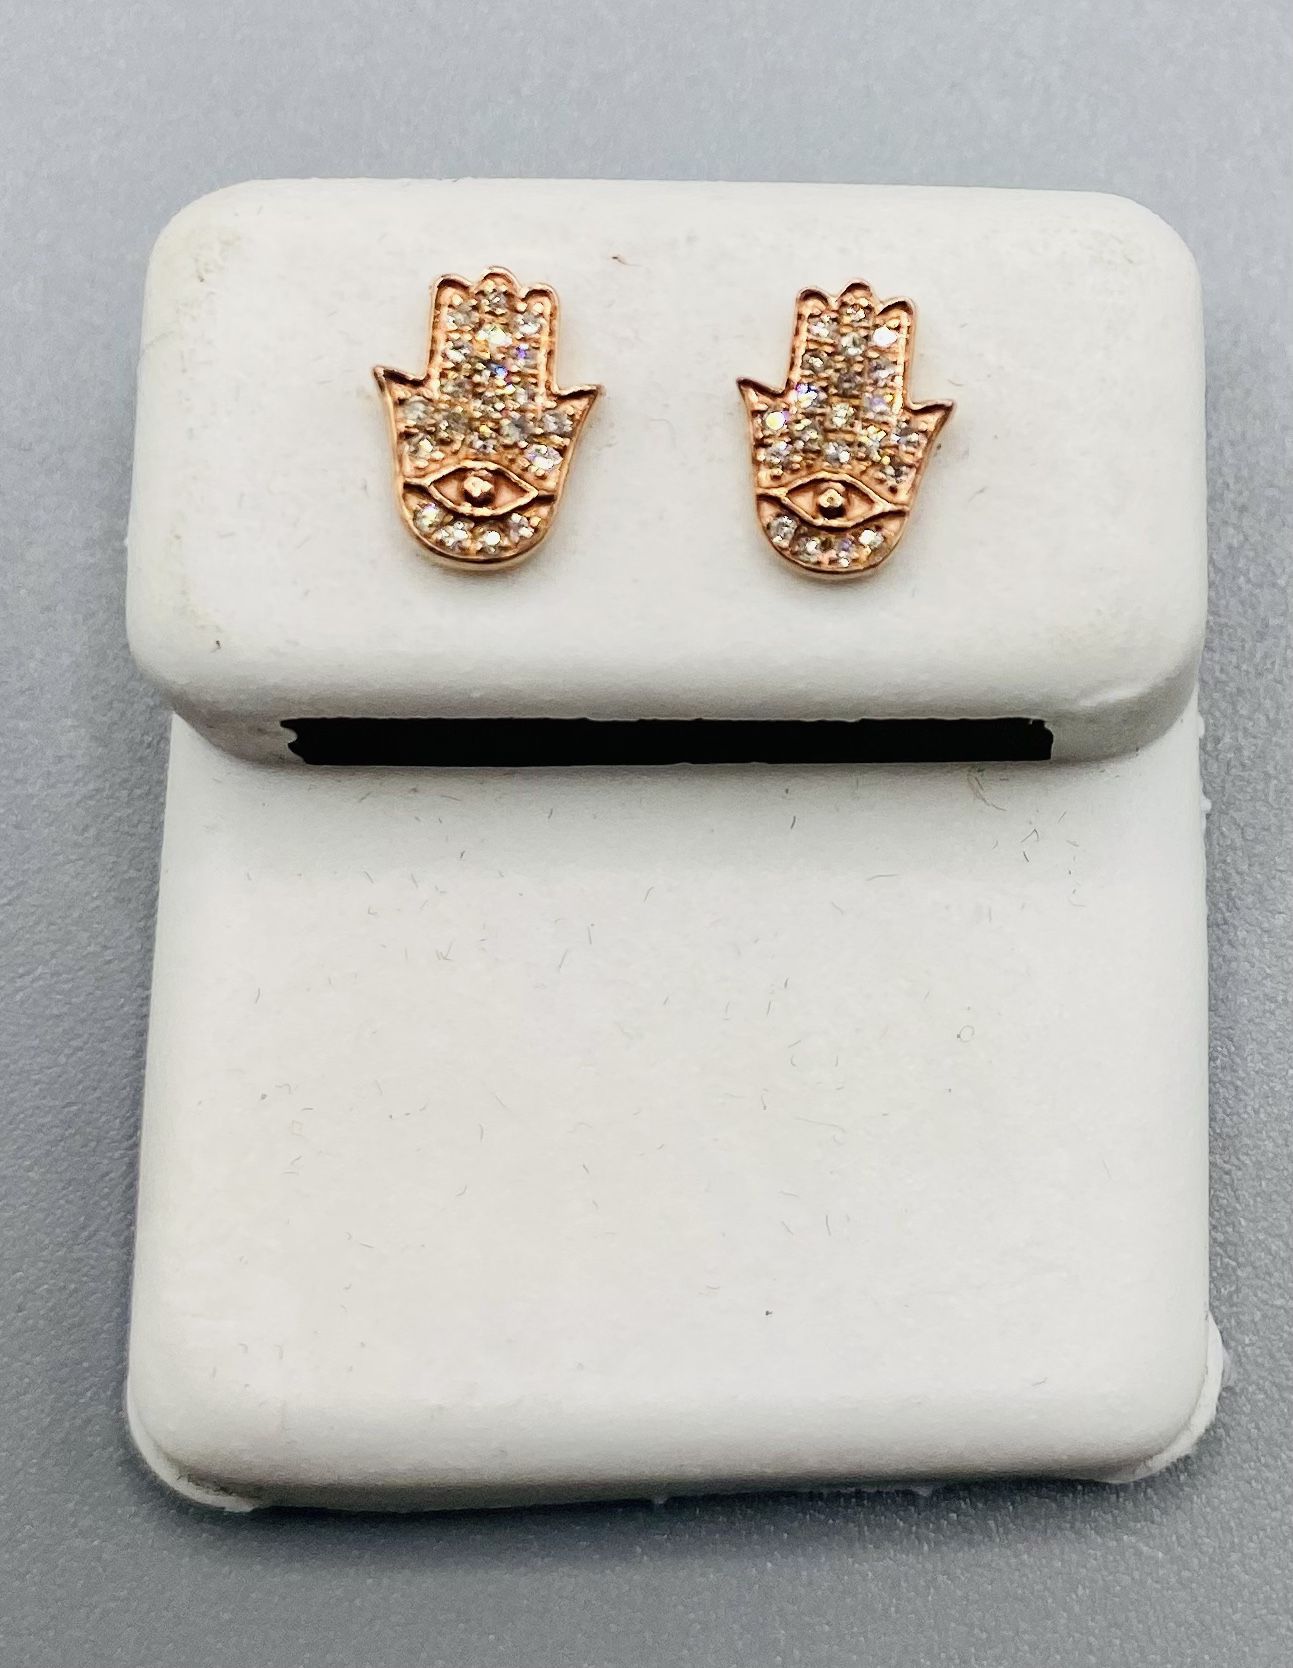 Original 925 Silver With Diamond Earrings (0.10 CTW)